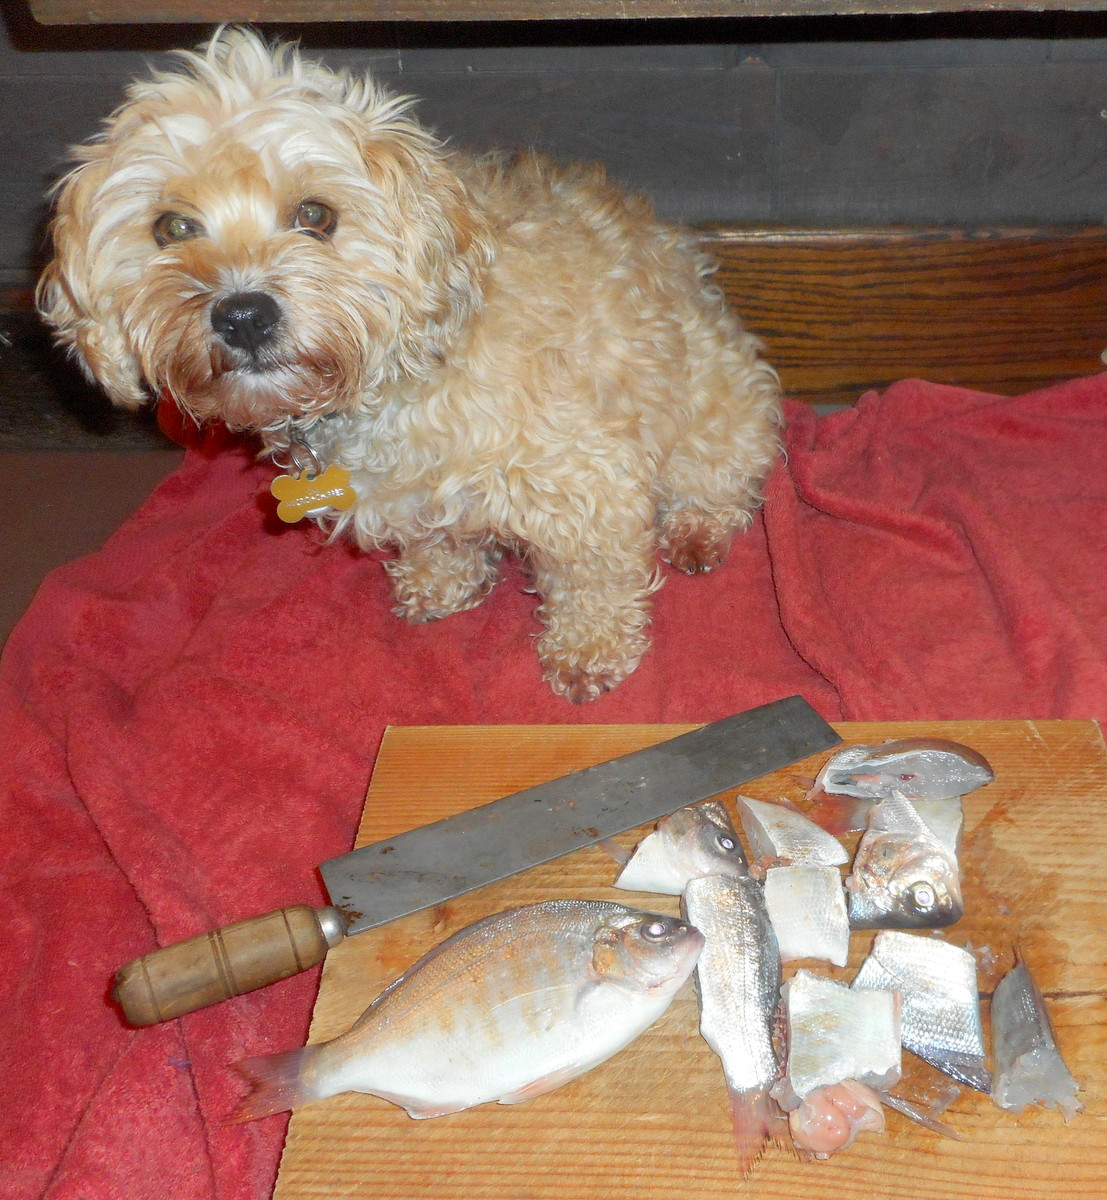 Whole fish make excellant dog chew bones!